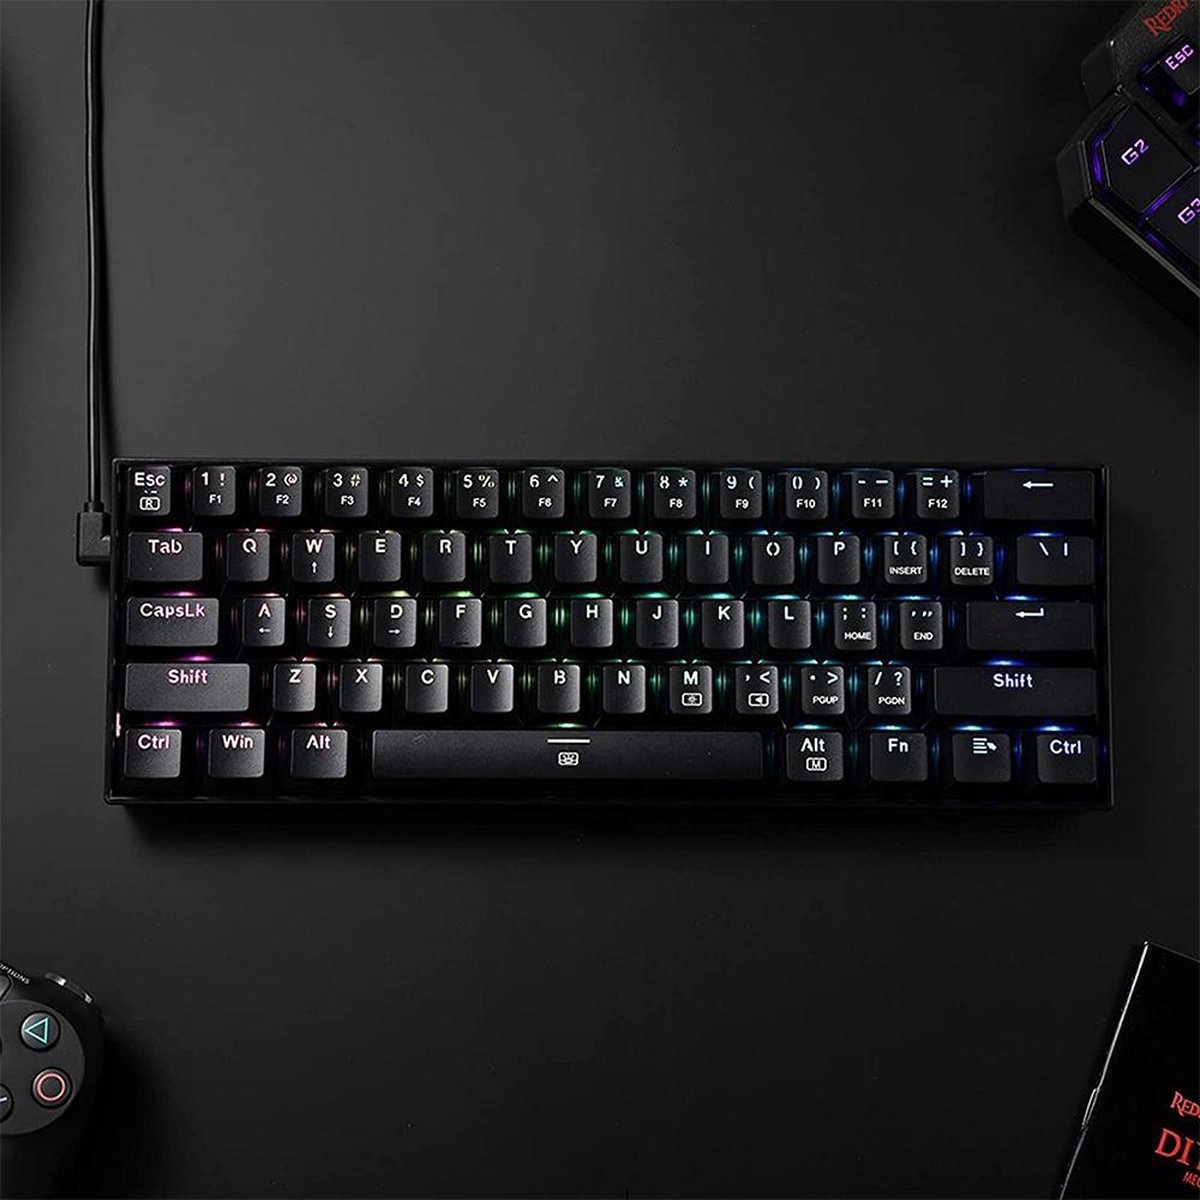 Redragon K630 RGB Dragonborn - 60% bedraad mechanische gaming toetsenbord - 61 toetsen | Gaming PC met RGB verlichting